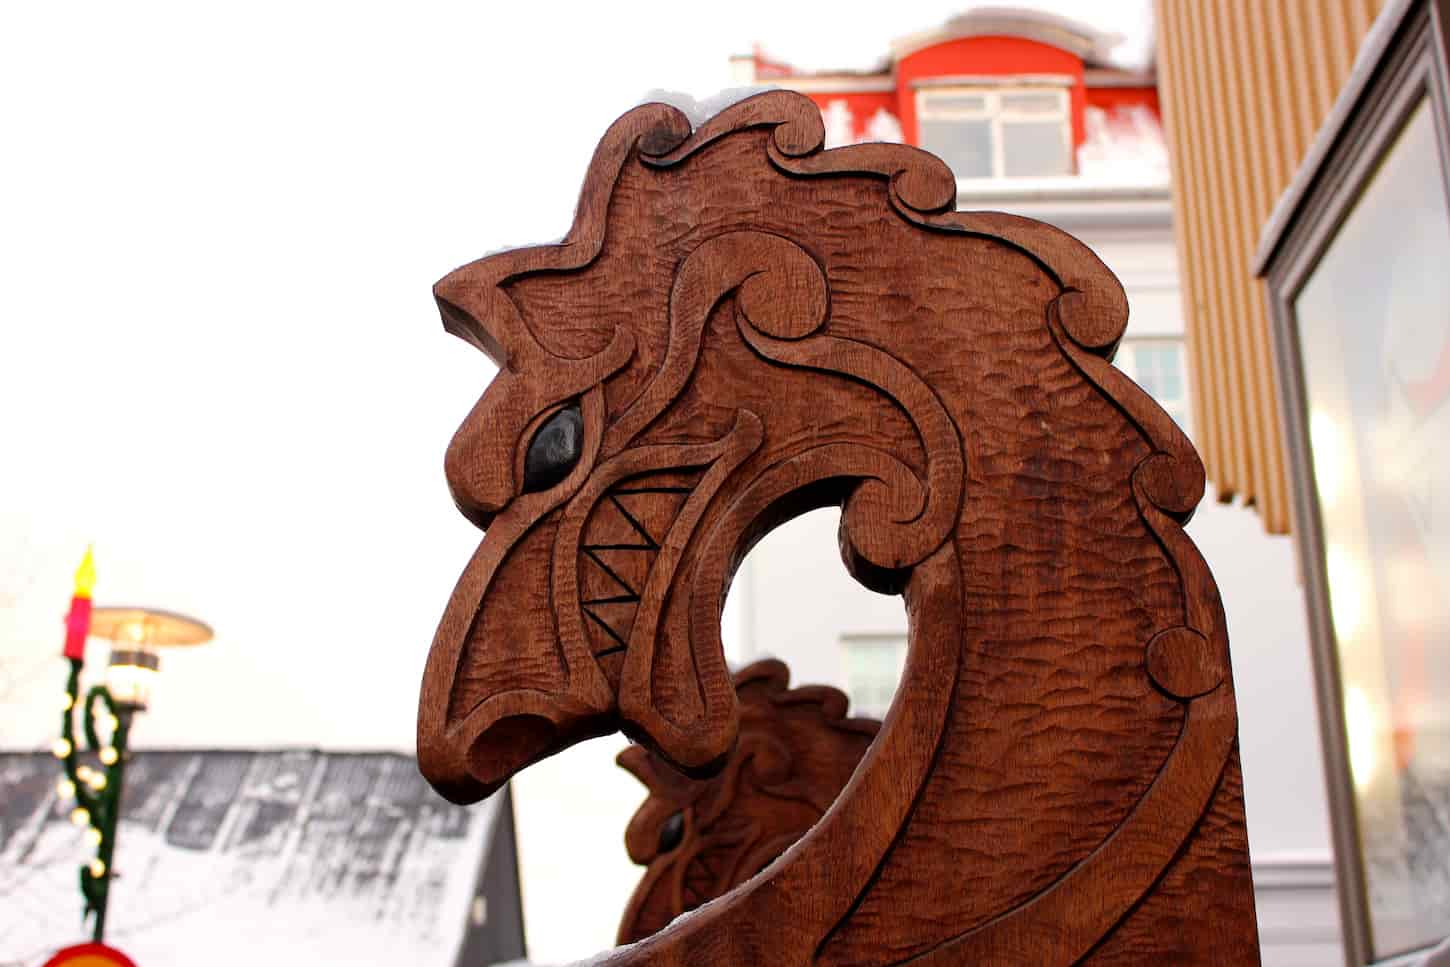 An image of a Viking dragon sculpture.